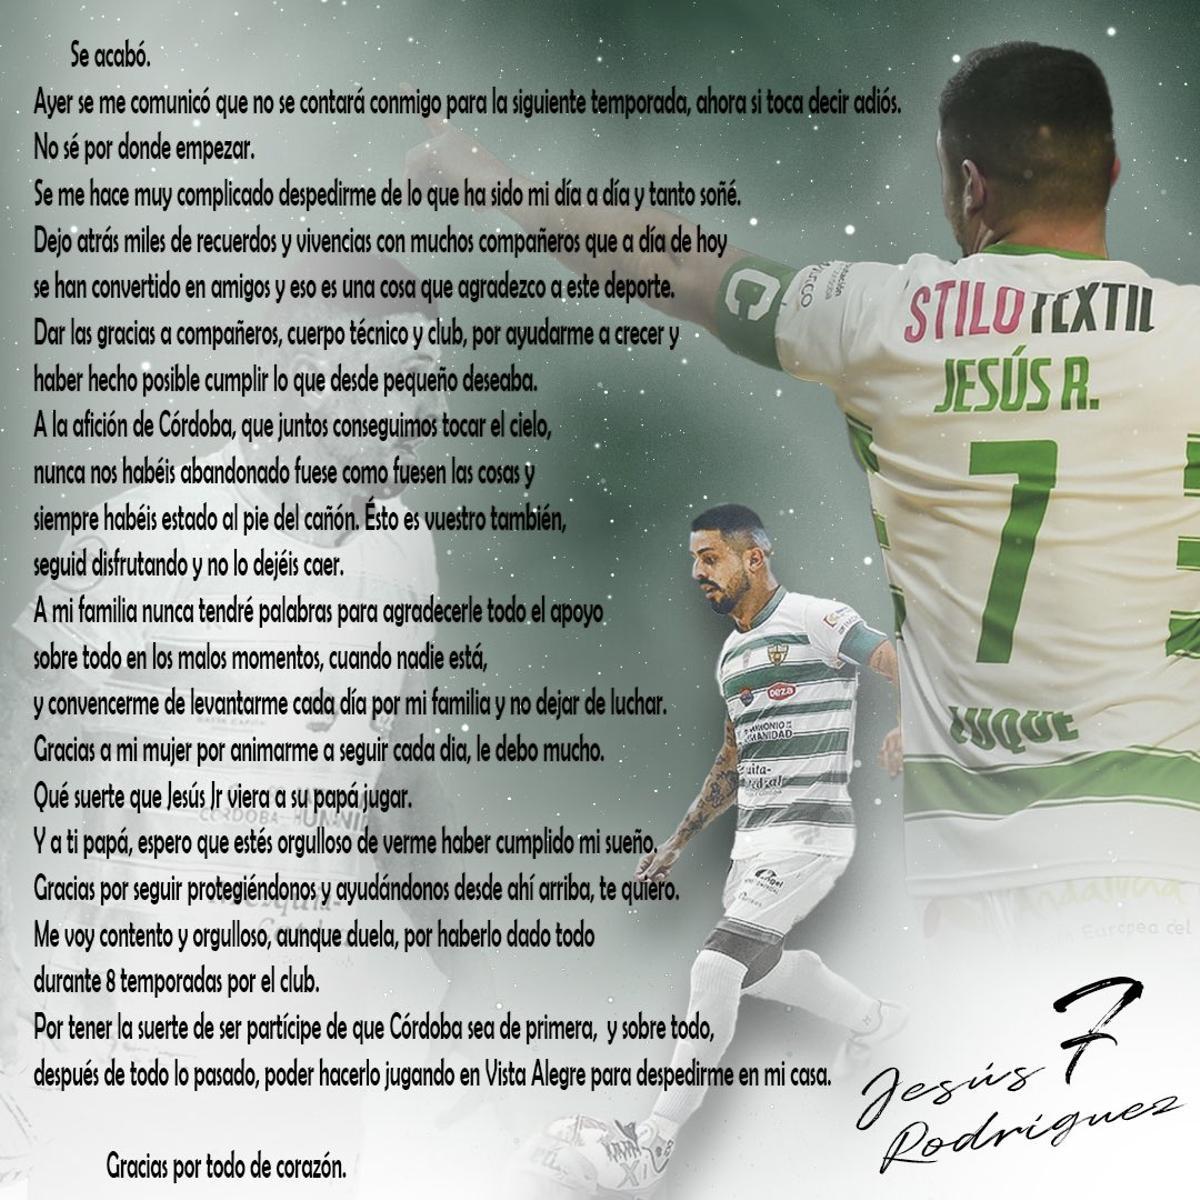 El mensaje de despedida del Córdoba Futsal de Jesús Rodríguez.